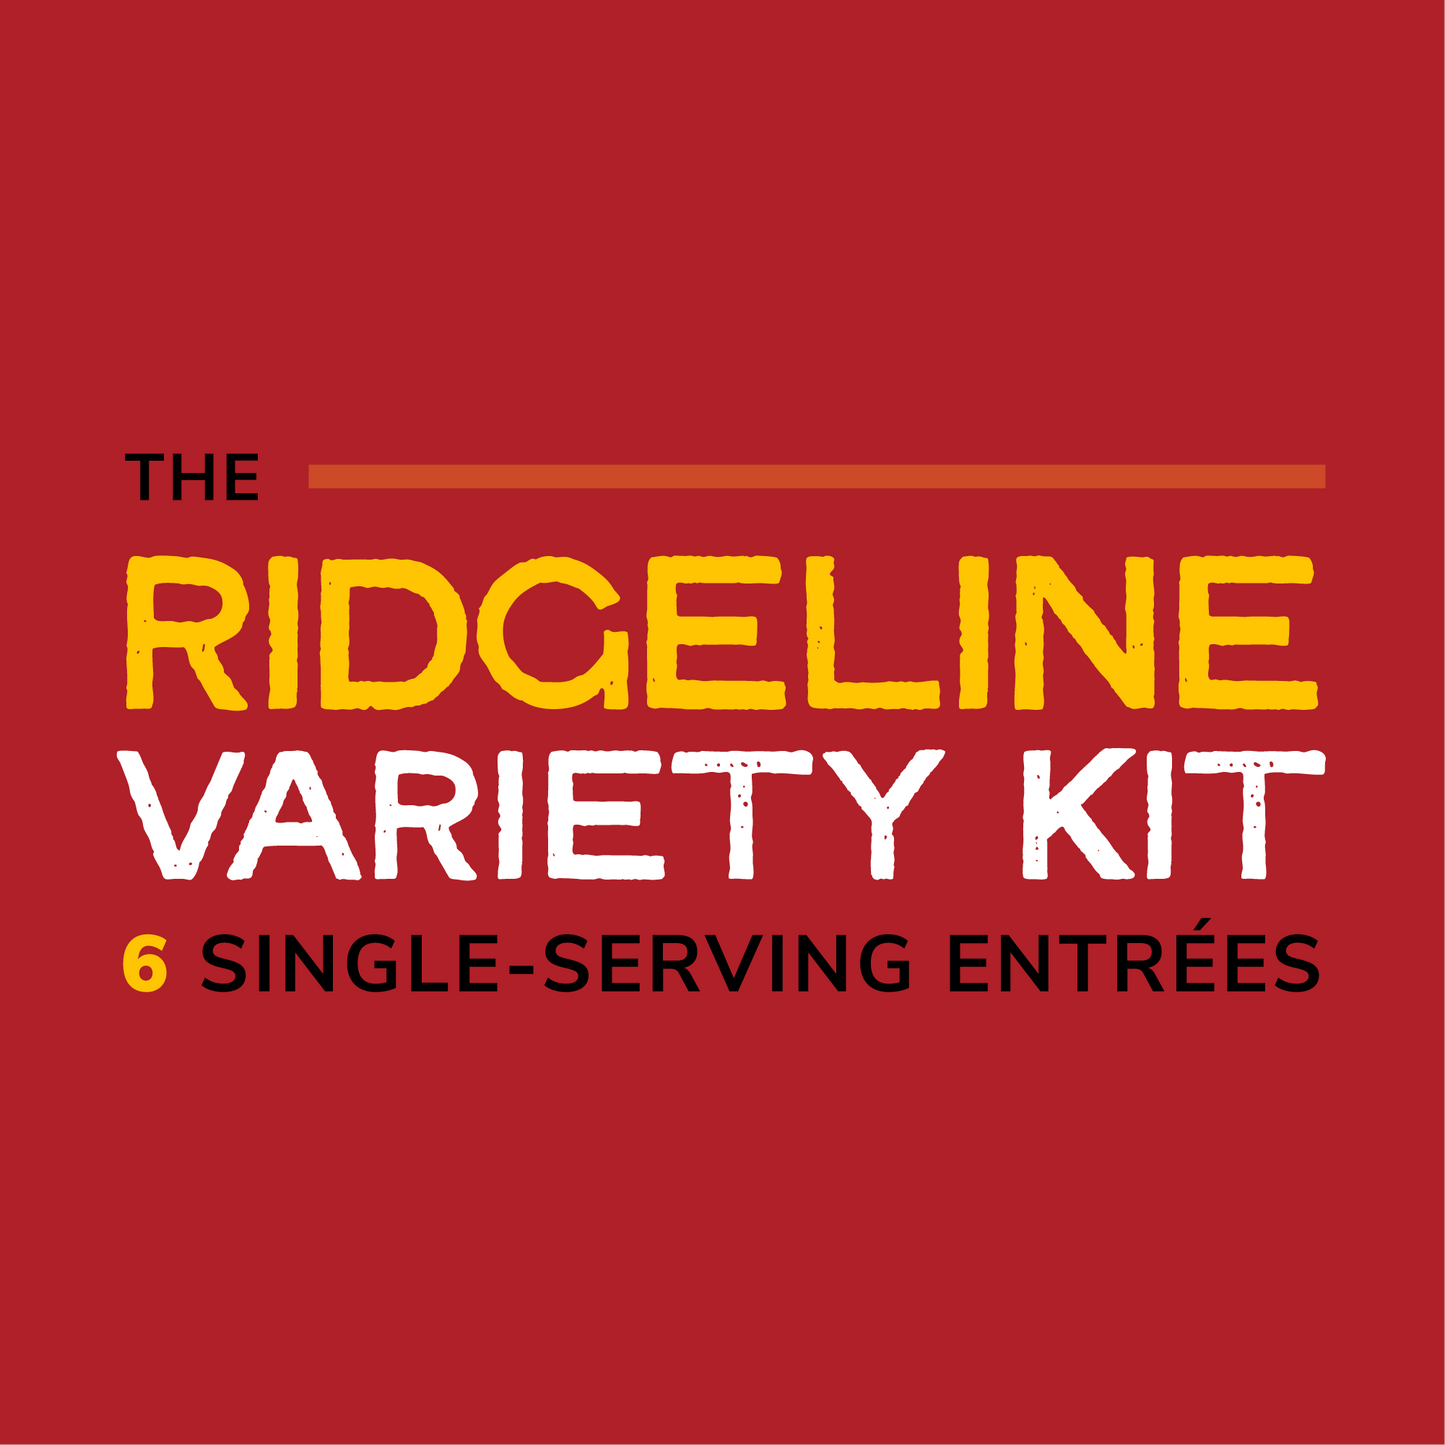 The Ridgeline Variety Food Kit